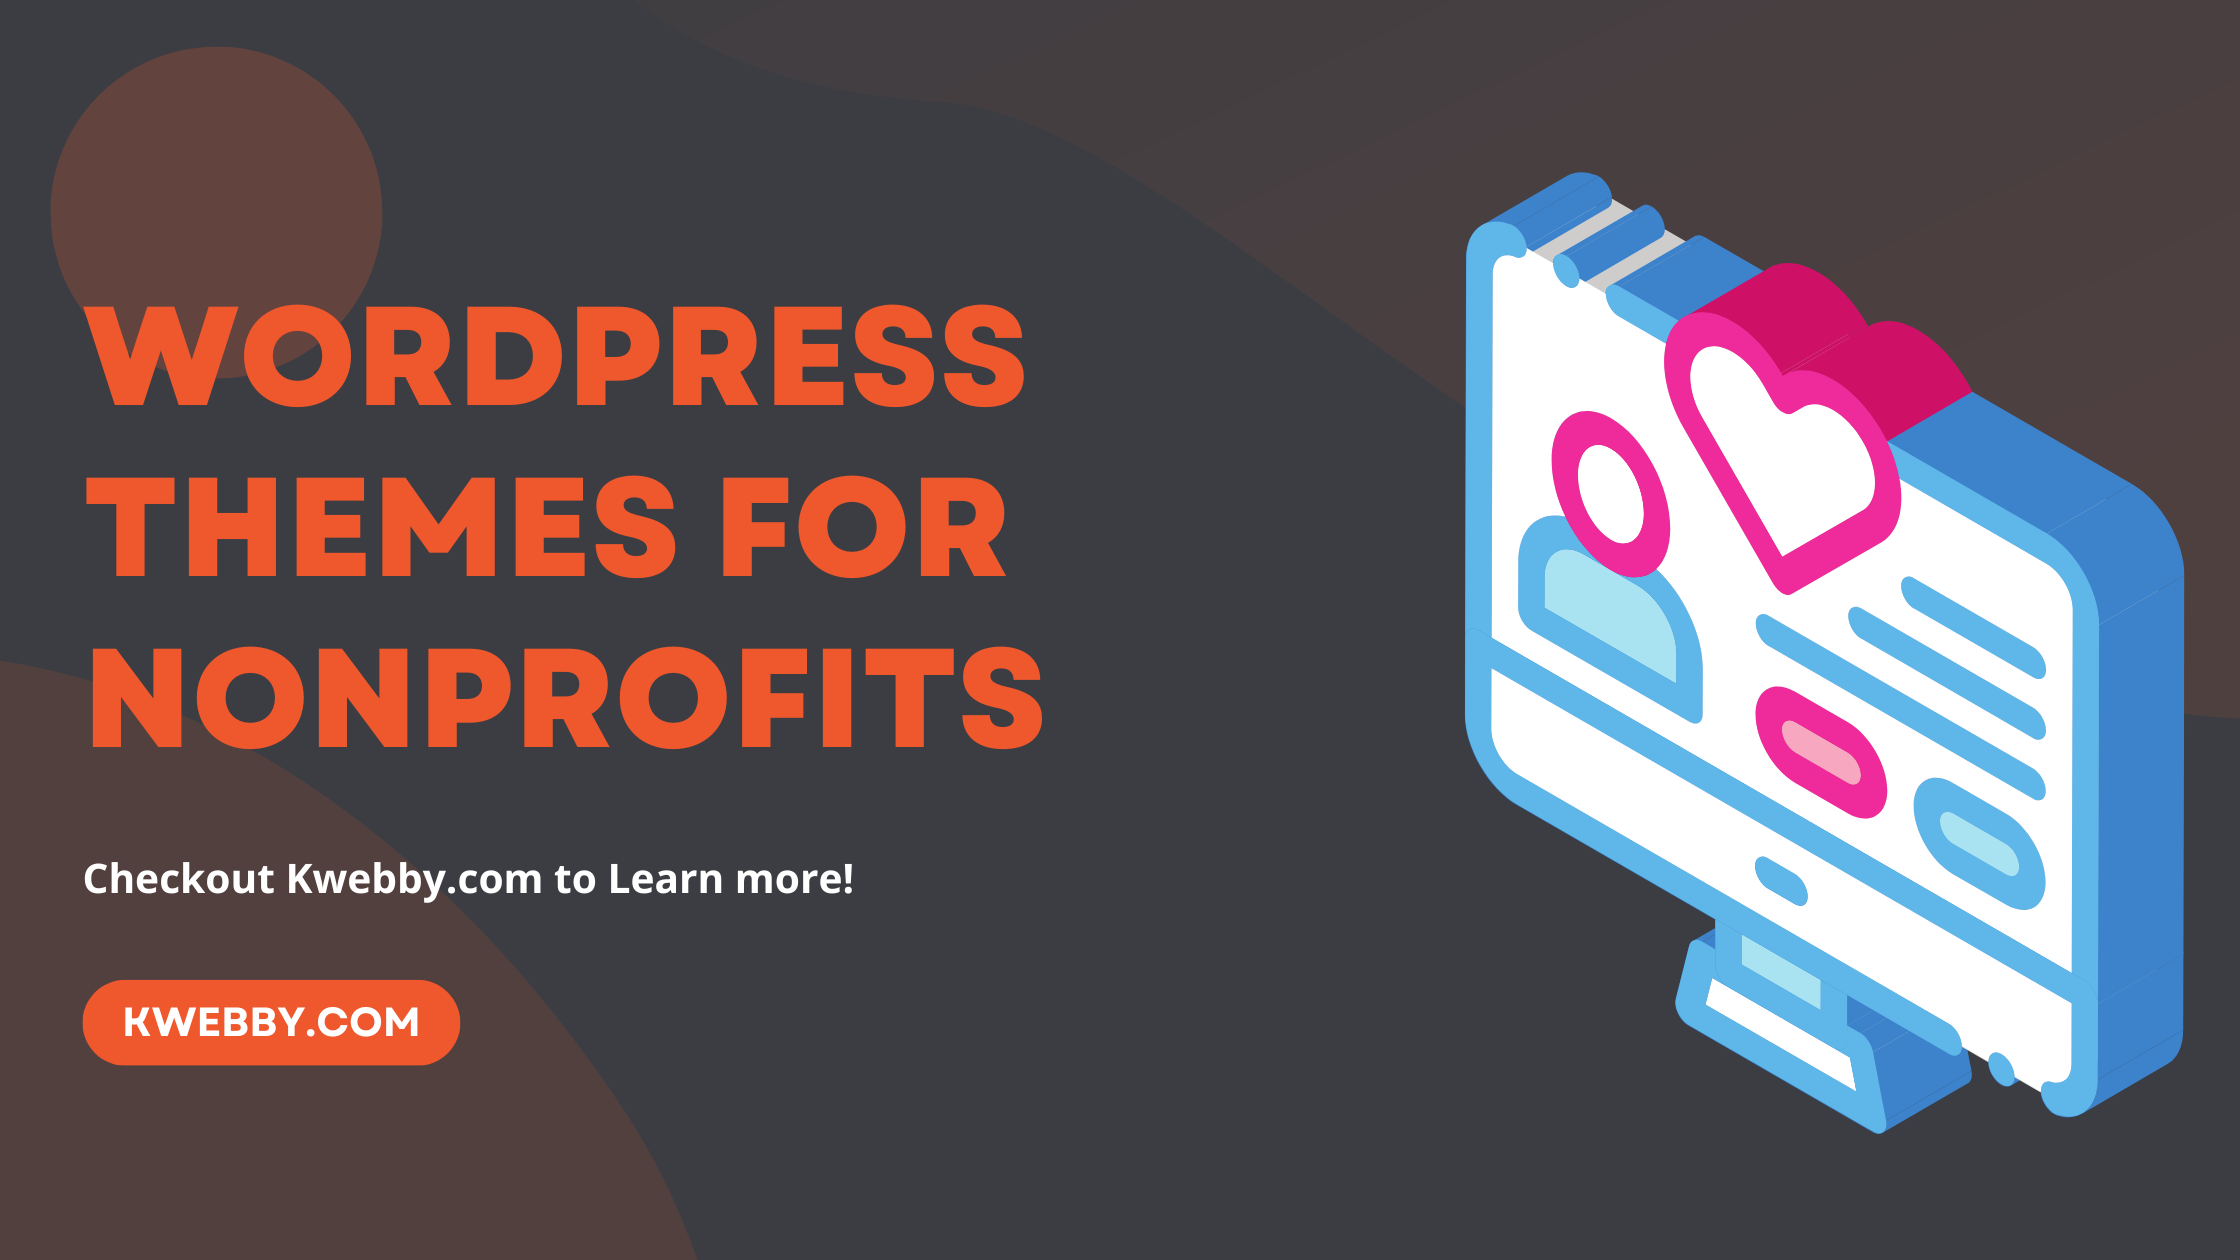 WordPress themes for NonProfits